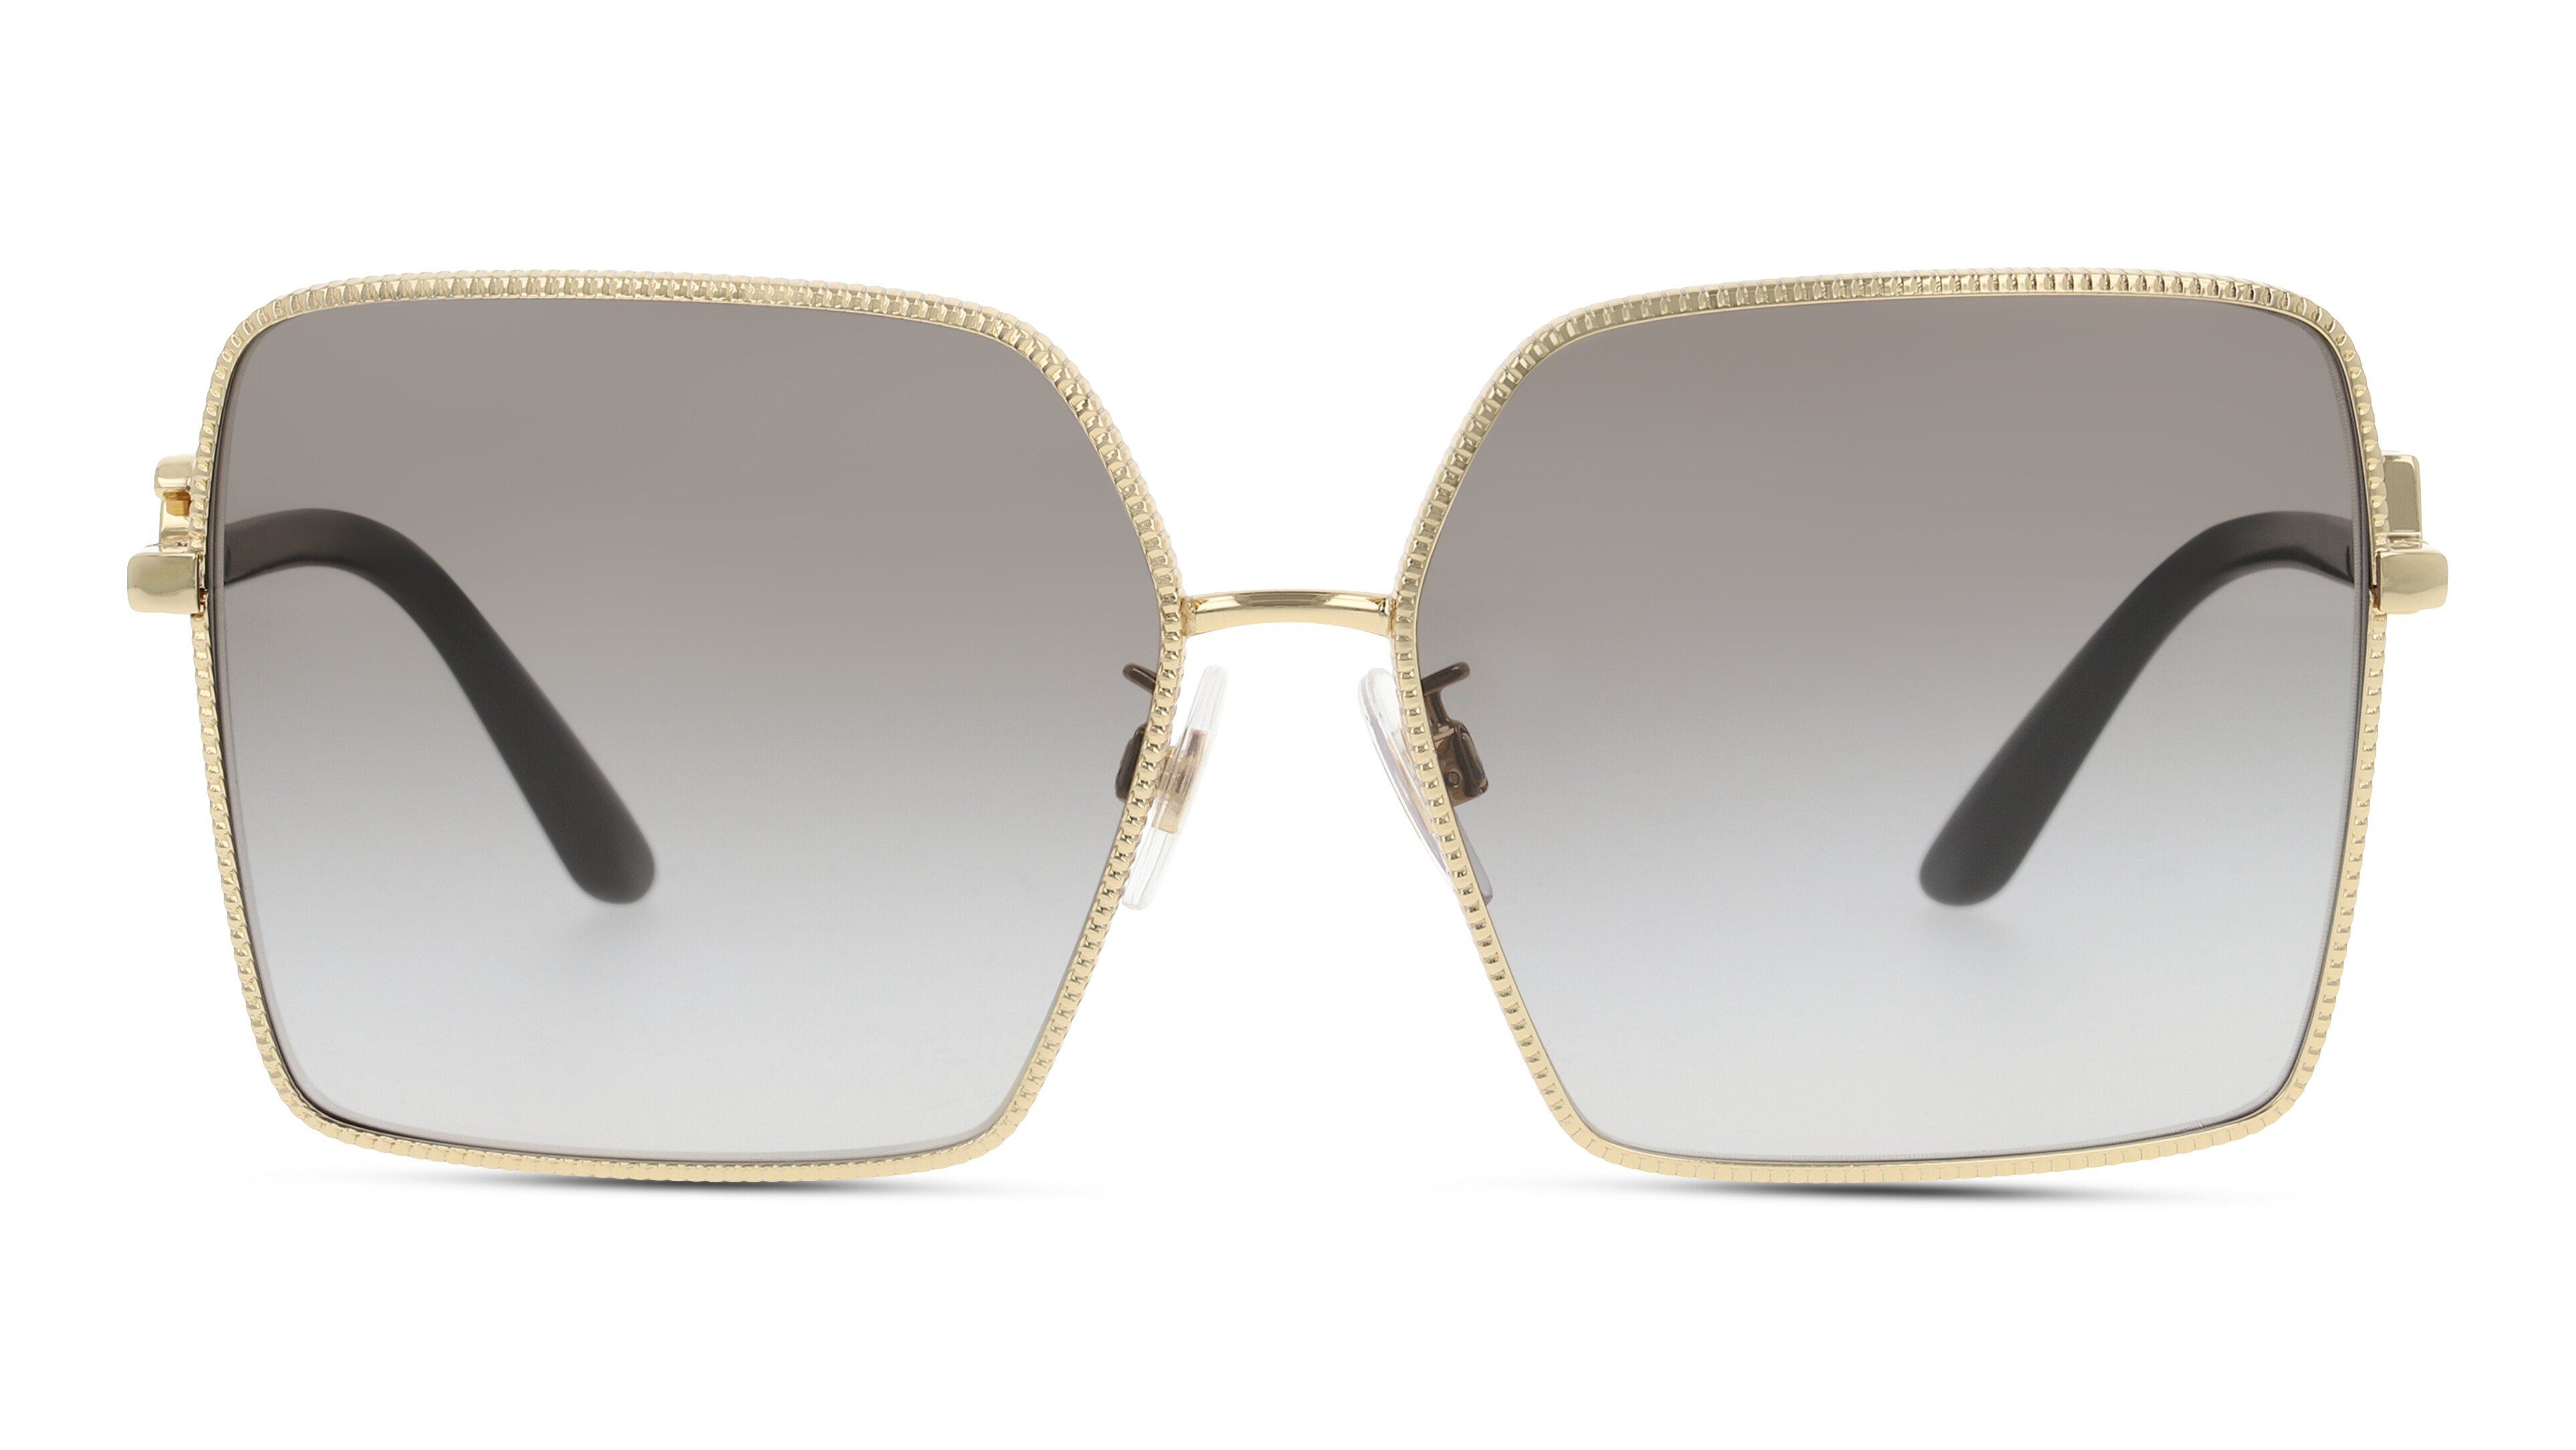 [products.image.front] Dolce&Gabbana 0DG2279 02/8G Sonnenbrille